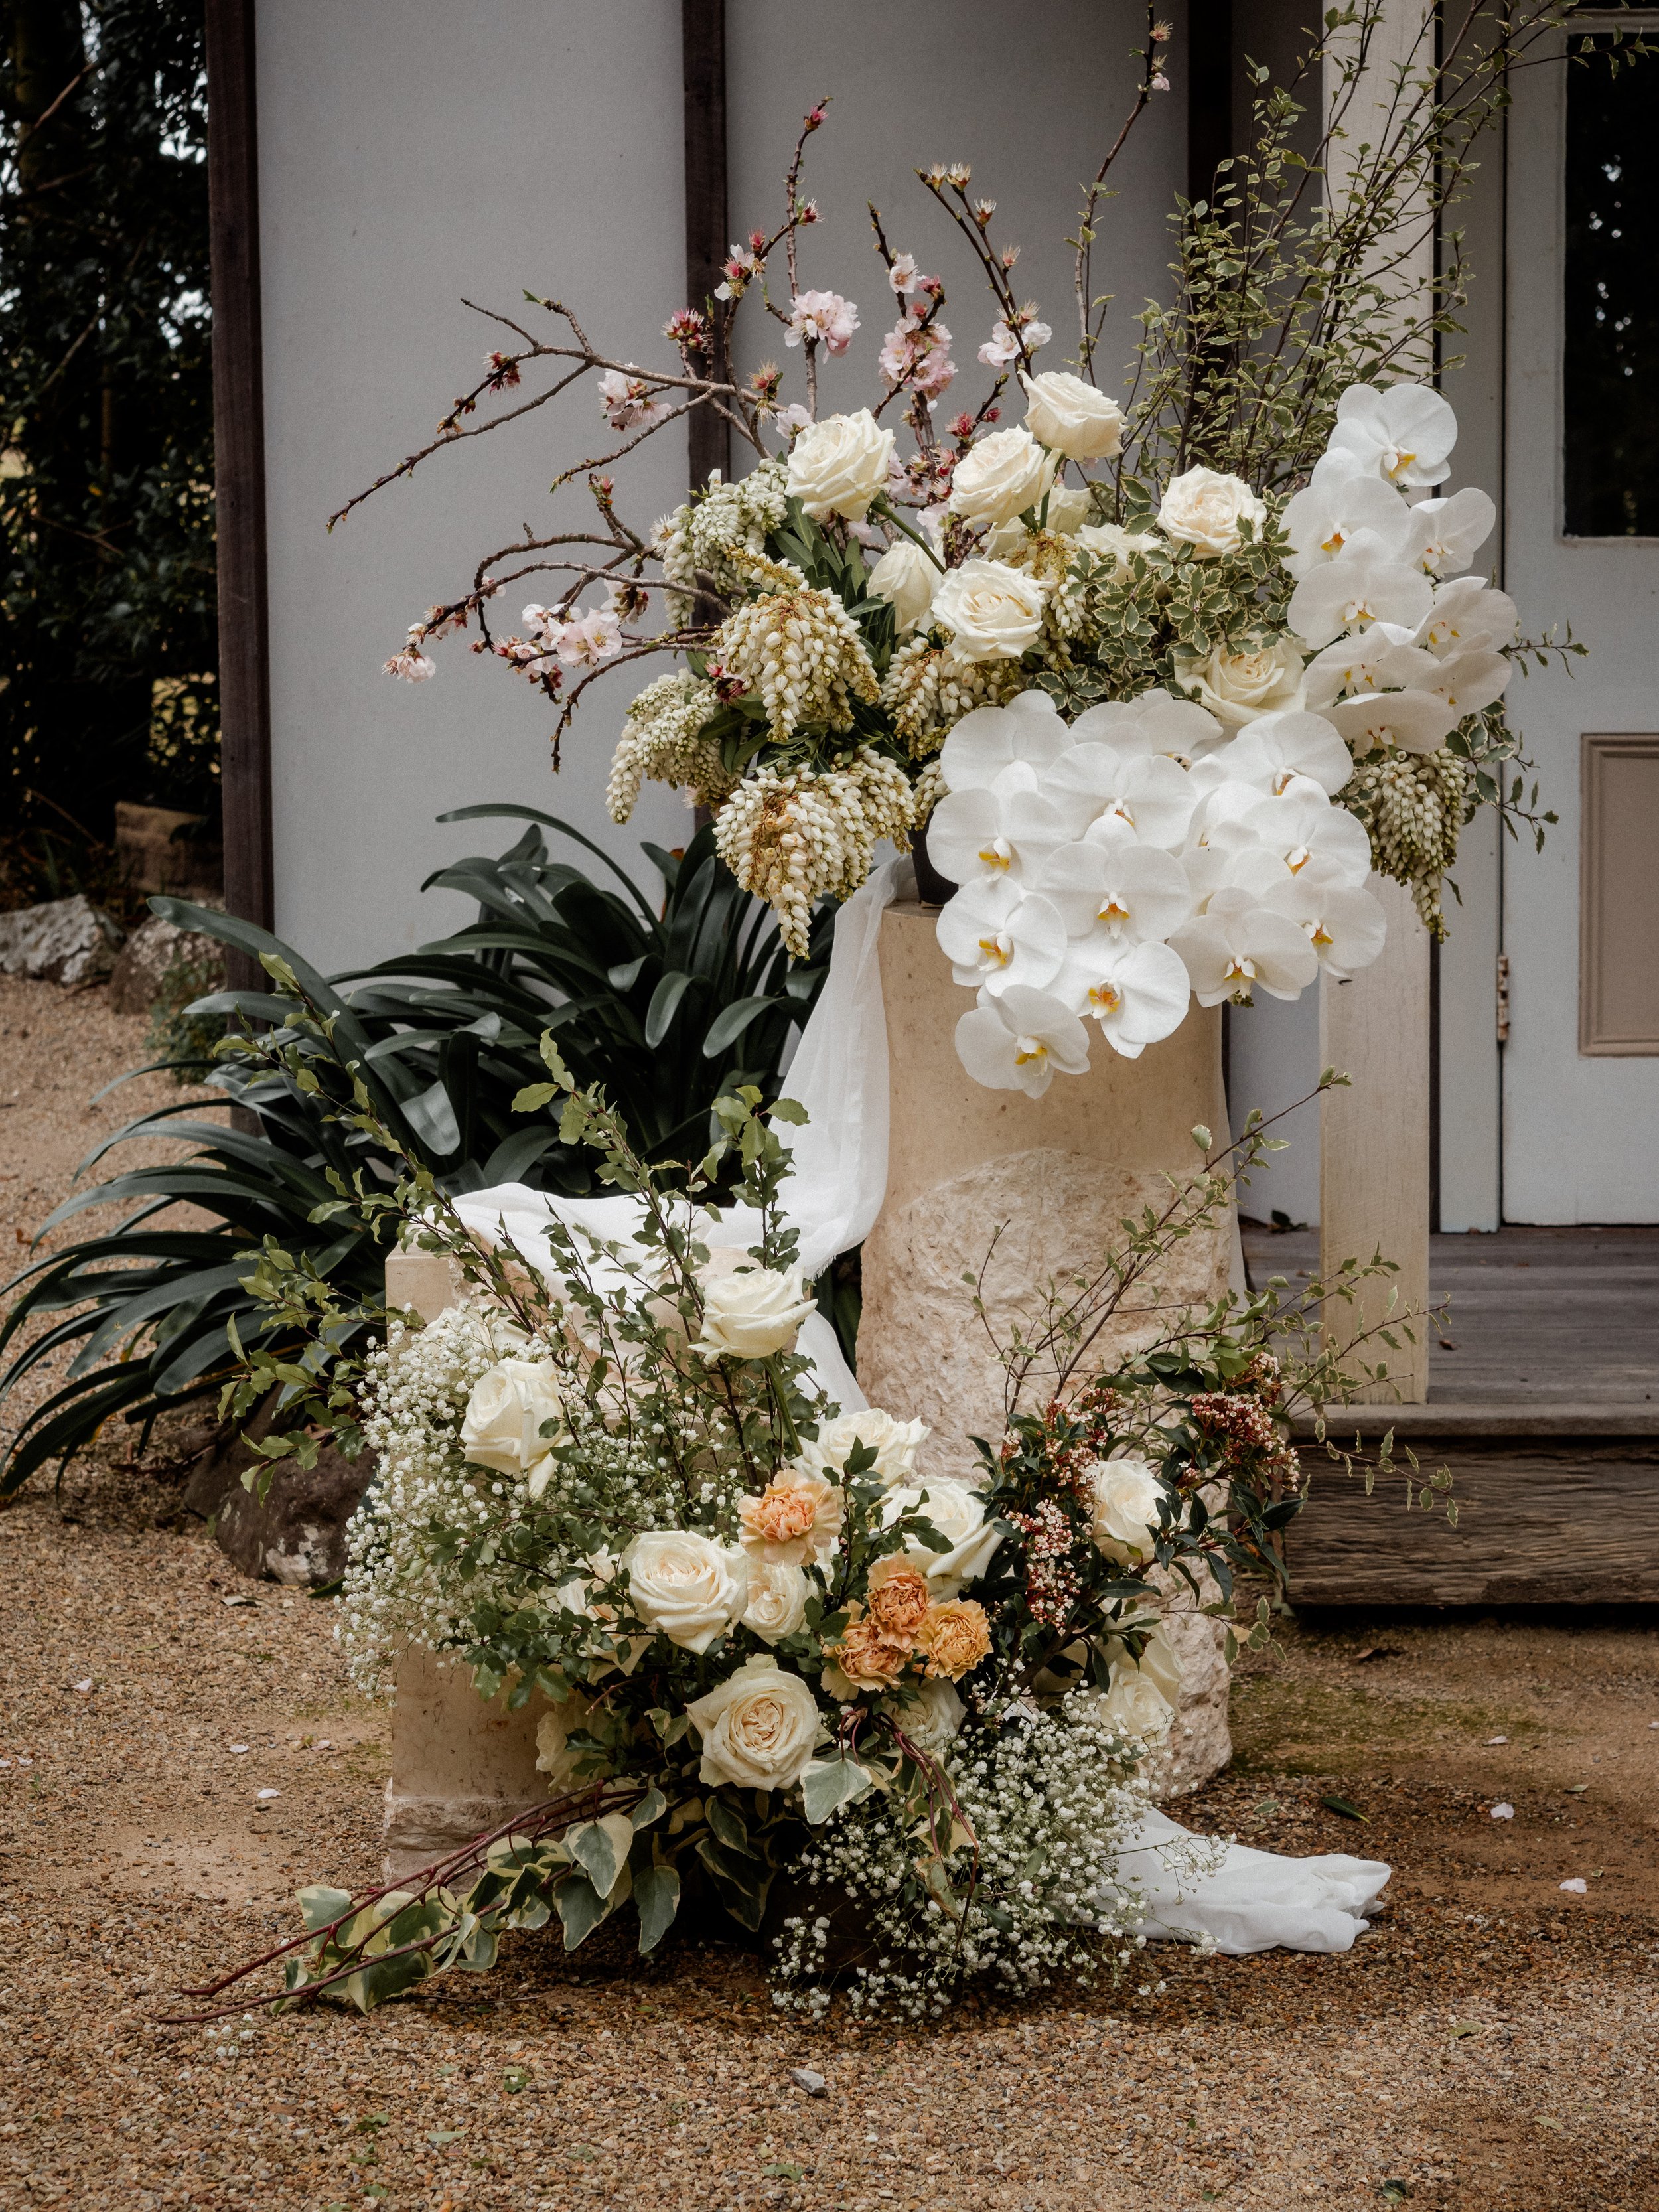 Forget Me Not Byron Bay Wedding Sean Reefman Photography Flowers.jpg